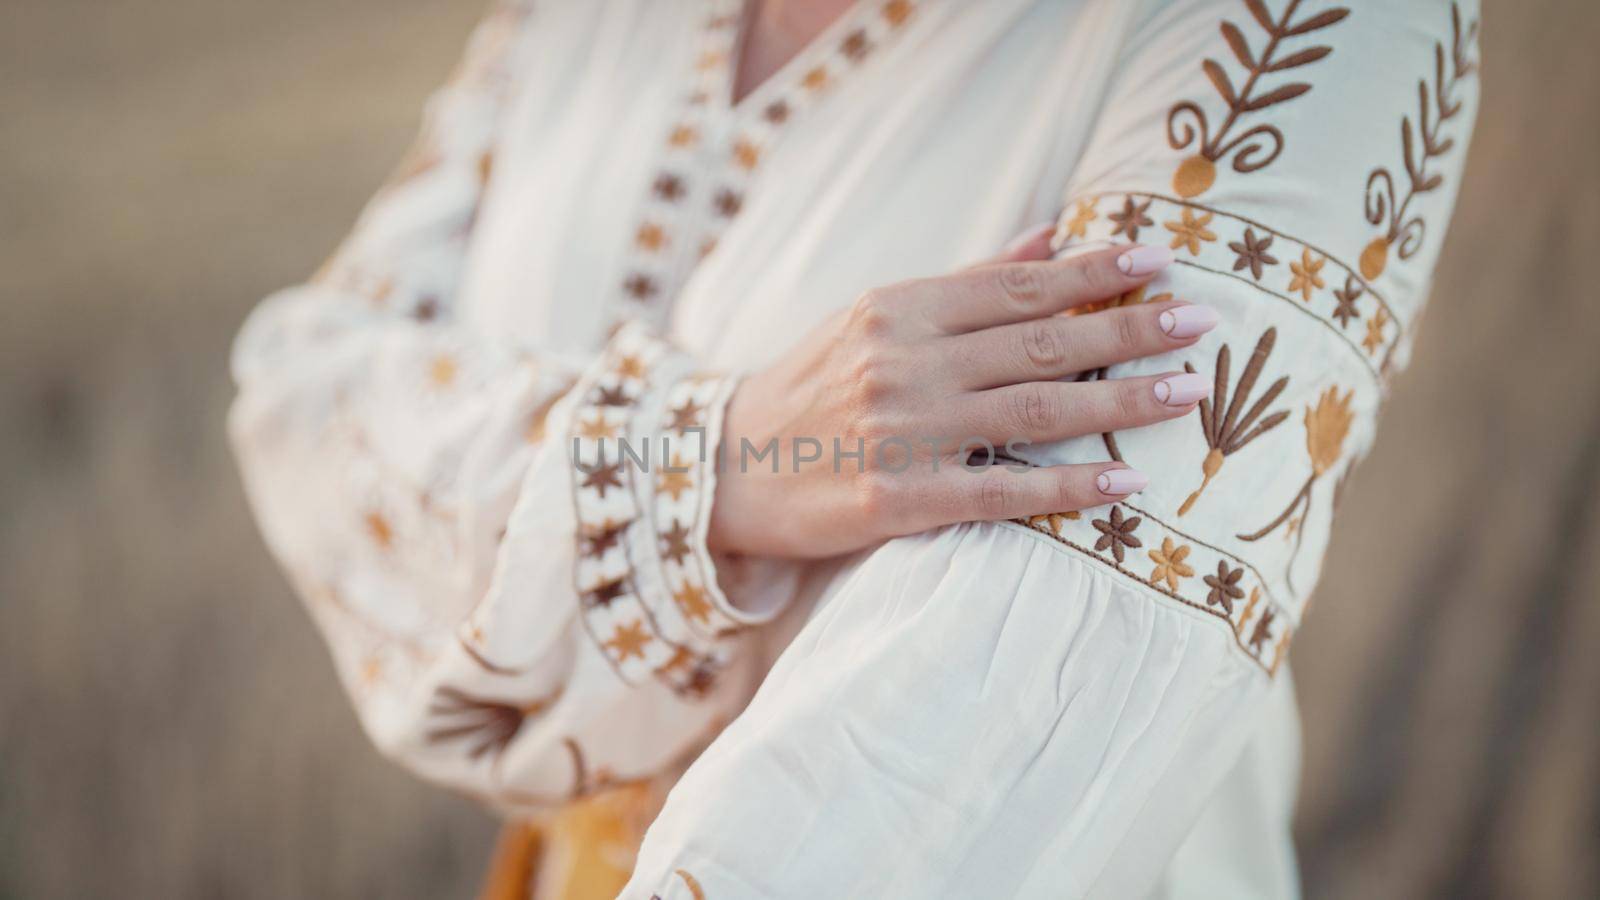 Ukrainian woman showing embroidery ornament, beautiful details of vyshyvanka shirt. National costume - embroidered shirt, texture, design, folk, handmade craft needlework by kristina_kokhanova